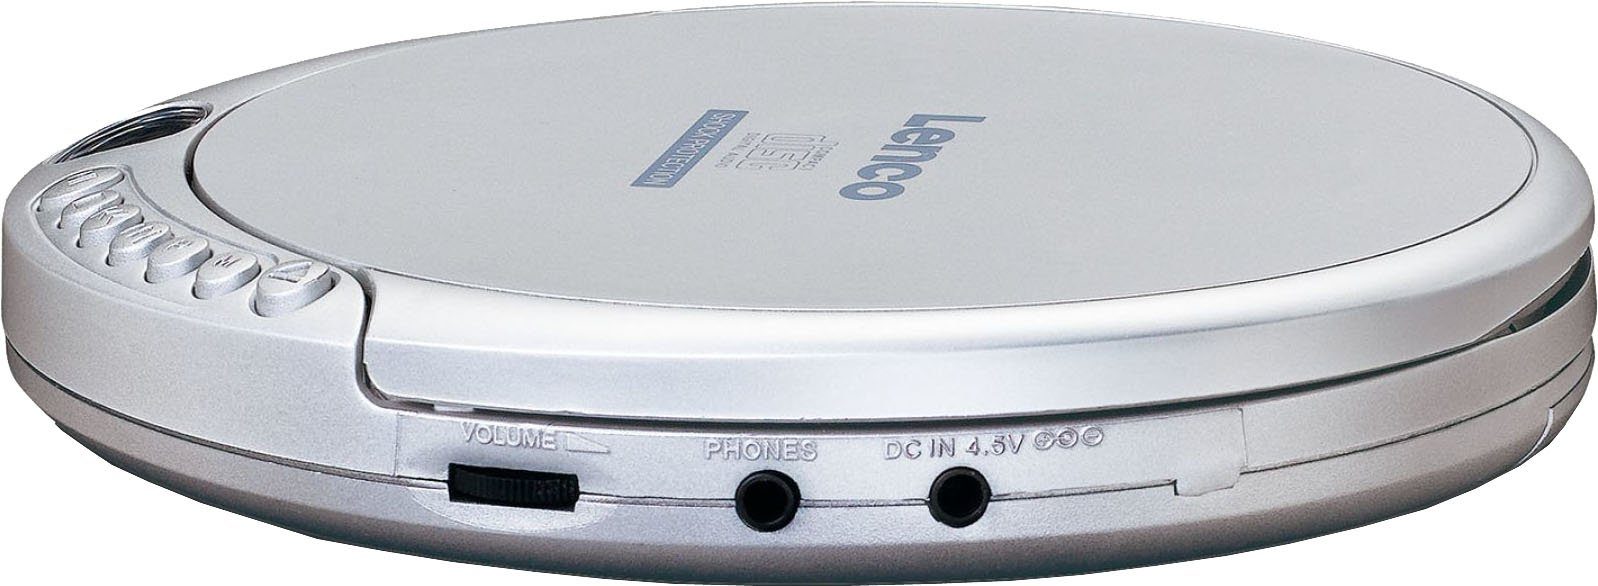 Lenco CD-201Sl CD-Player (Anti-Schock-Funktion) Silber